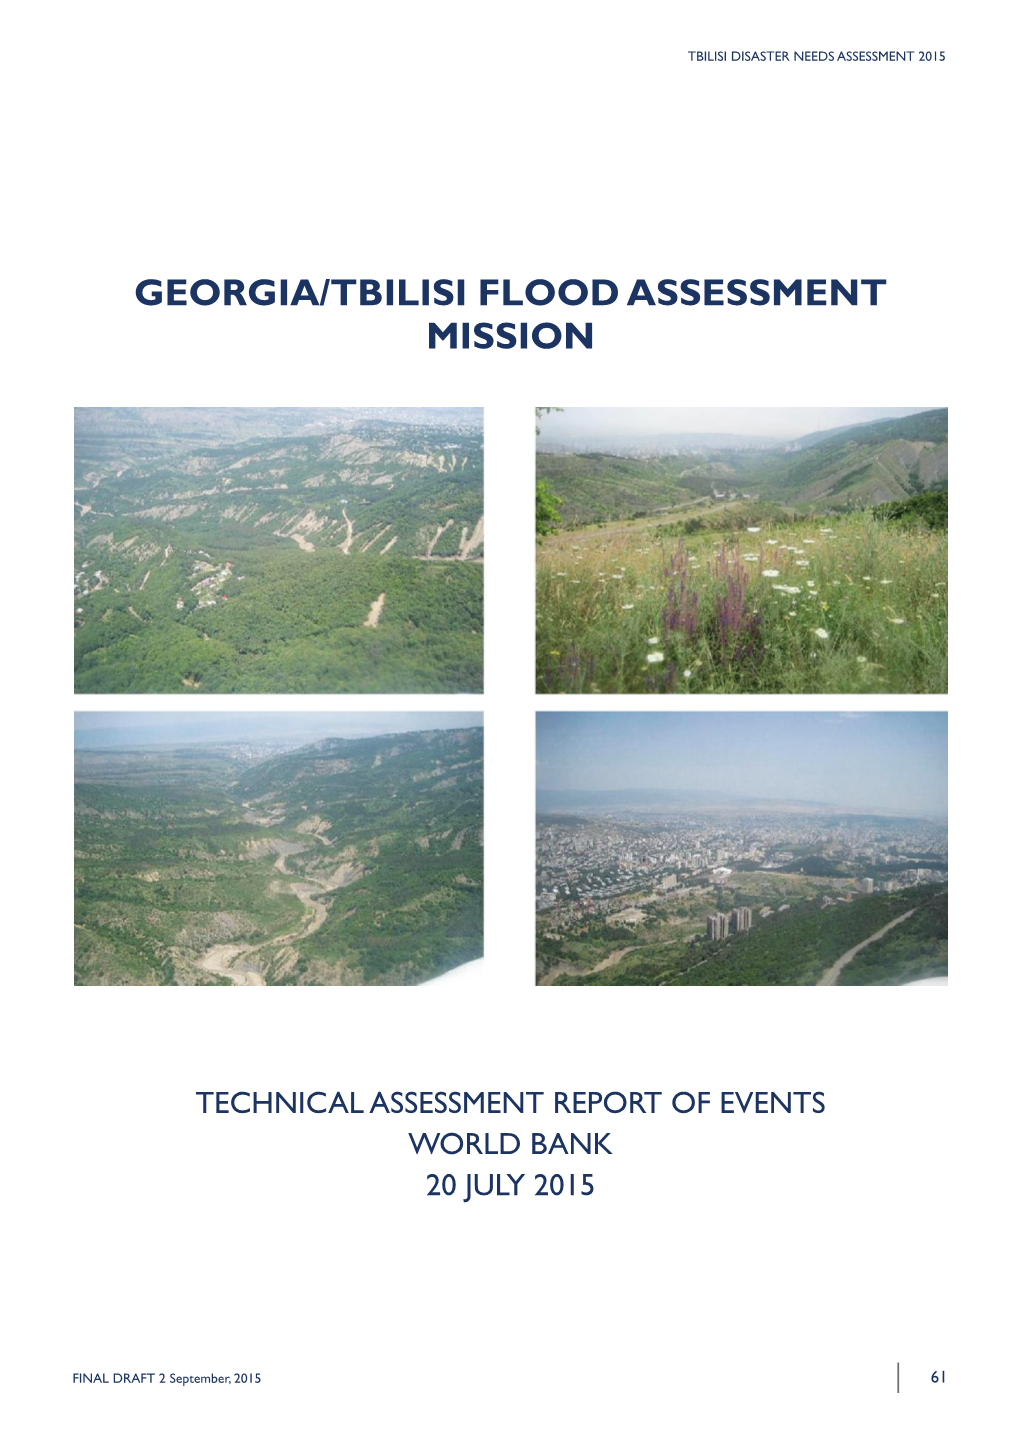 Georgia/Tbilisi Flood Assessment Mission